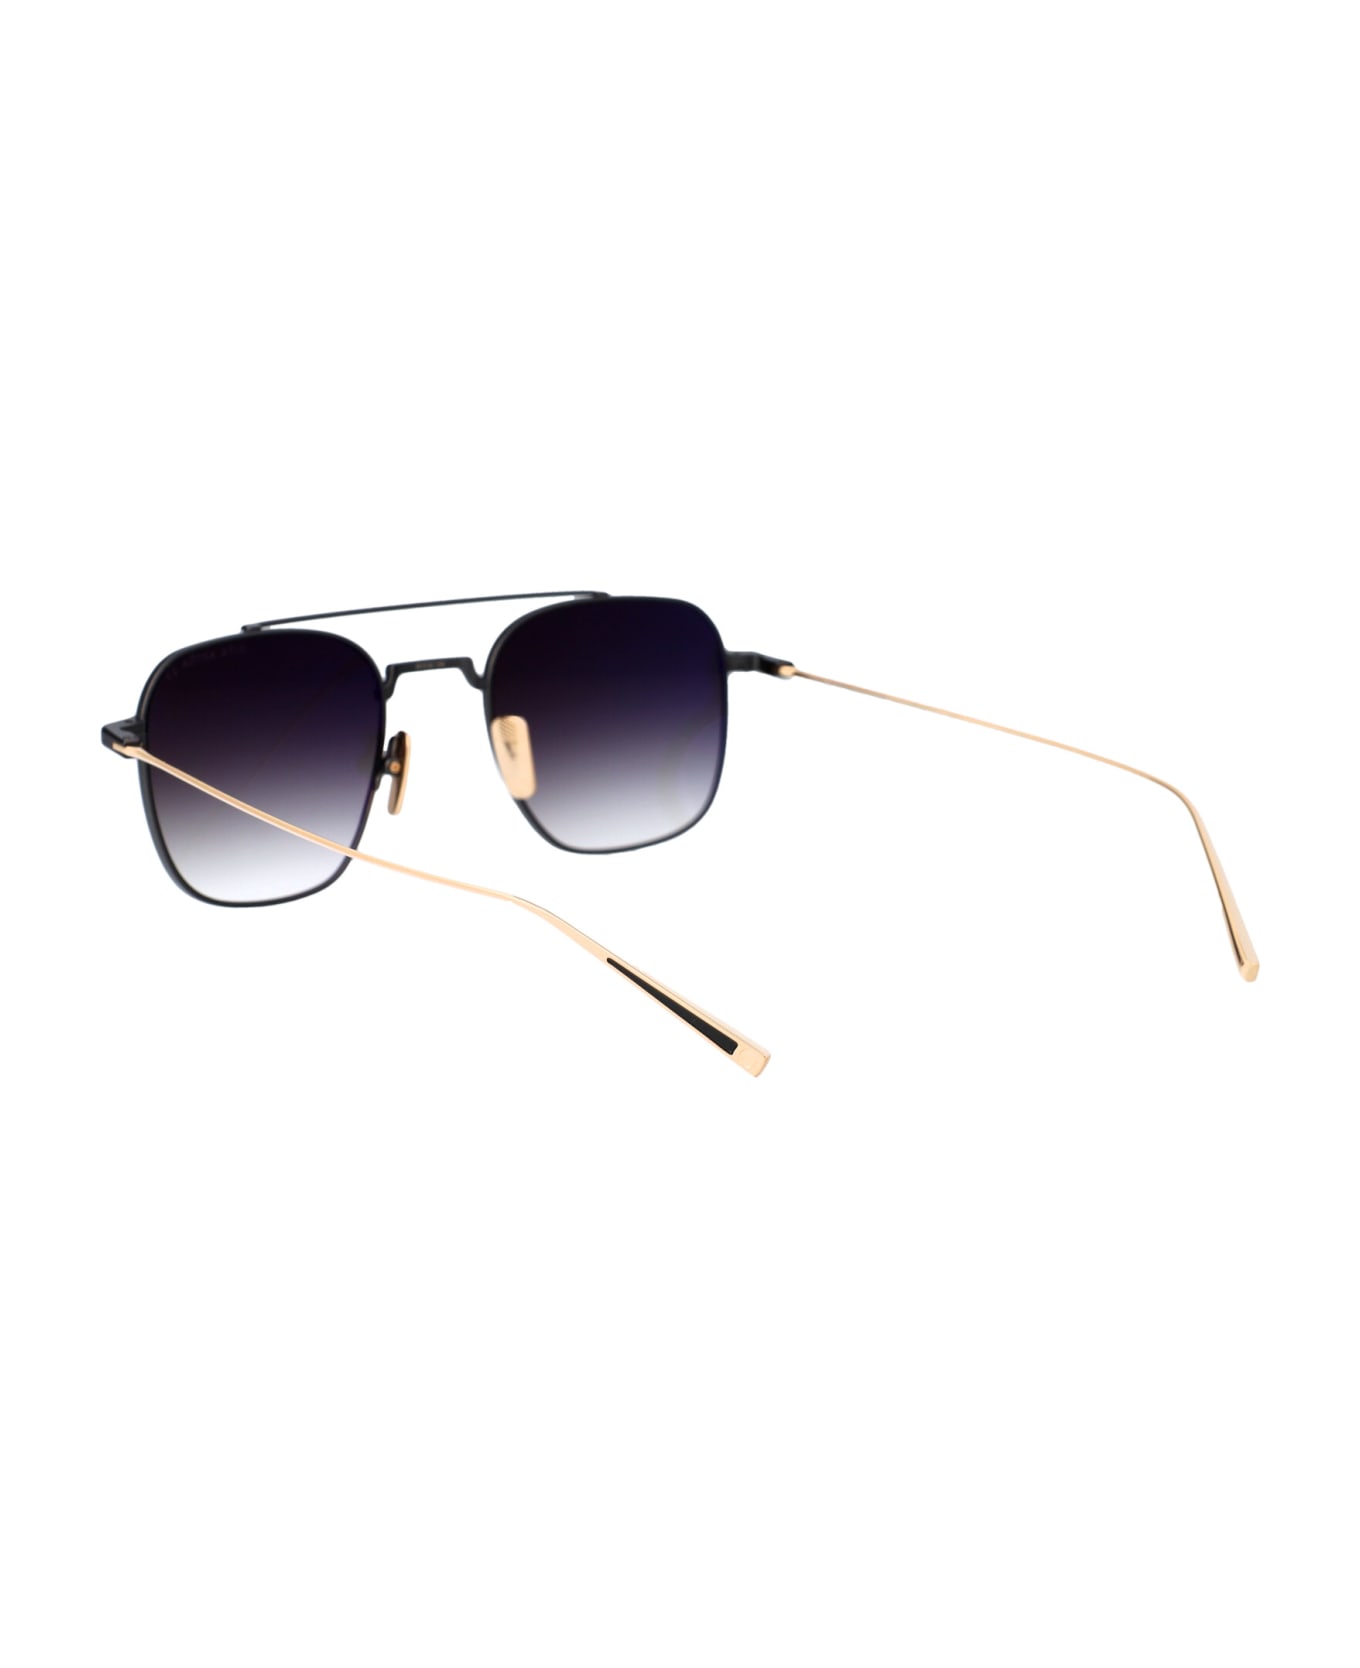 Dita Artoa.27 Sunglasses - 02 Black Iron - White Gold w/ Grey to Clear Gradie